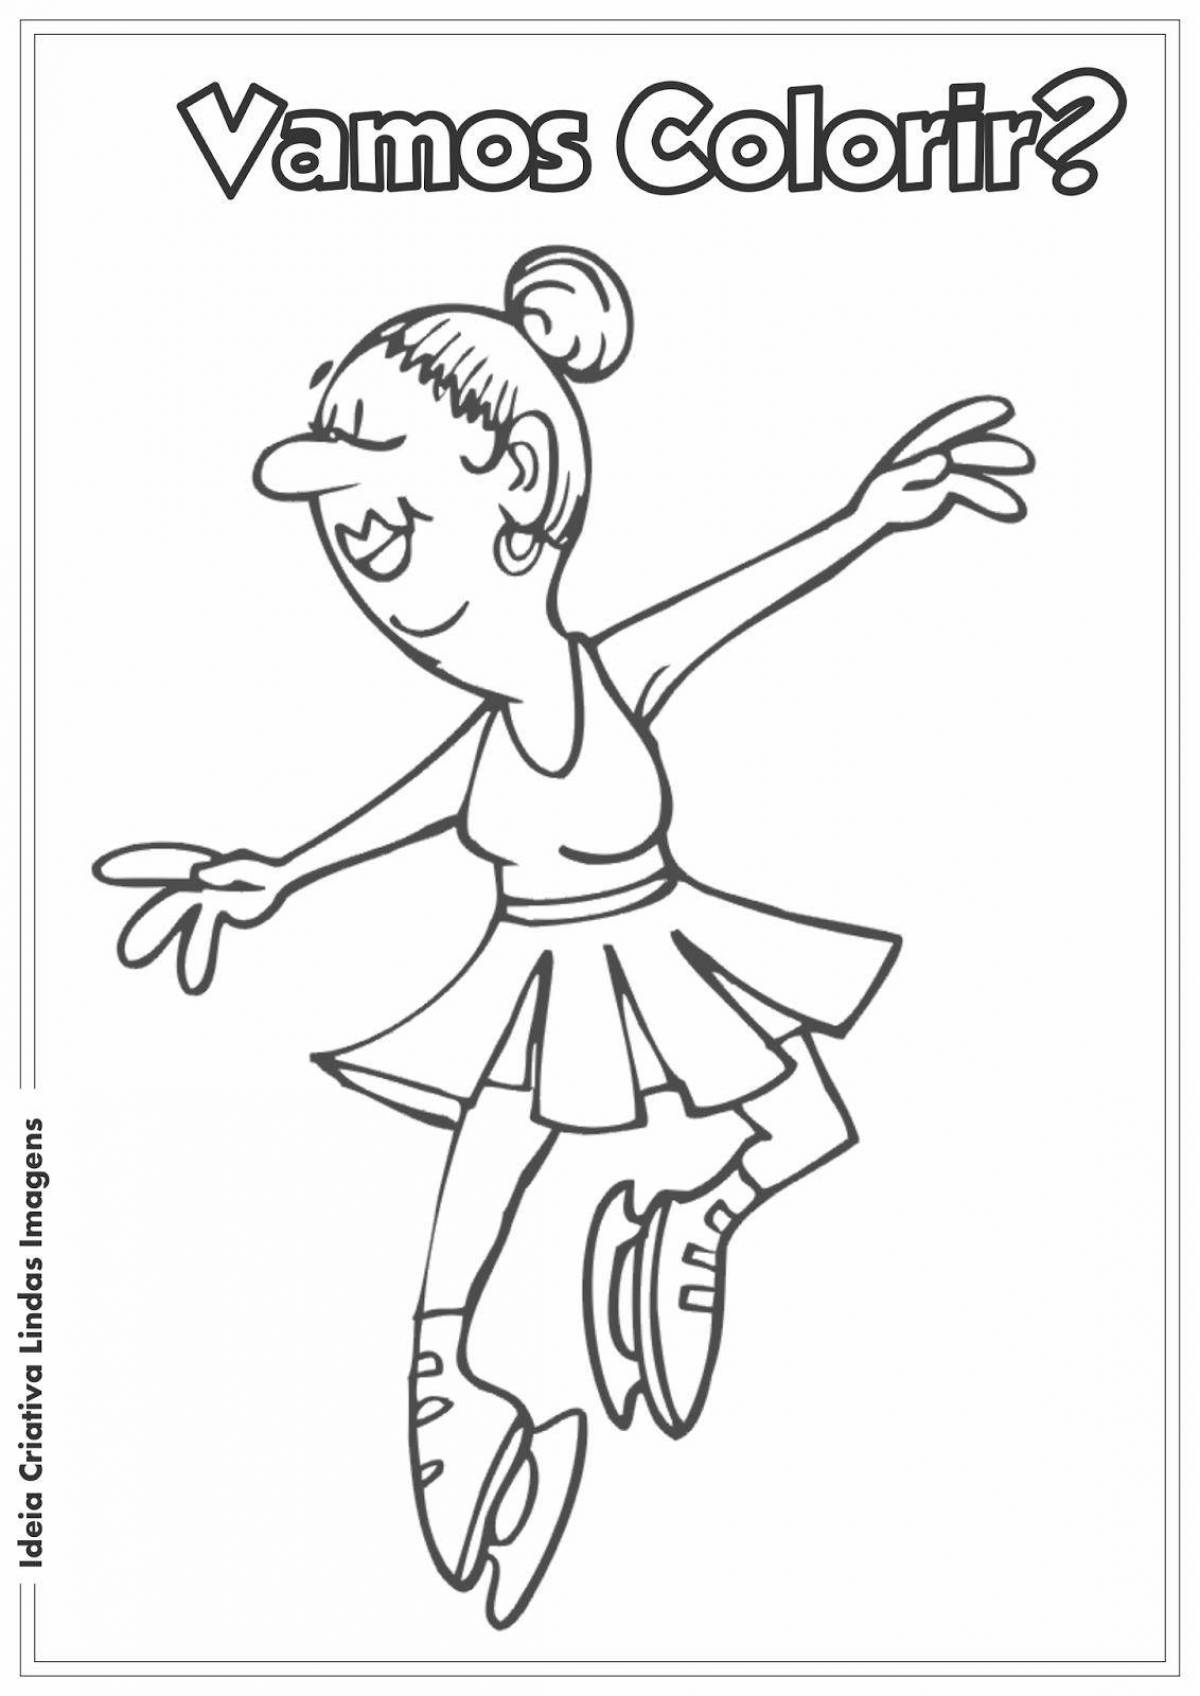 Joyful coloring figure skater girl